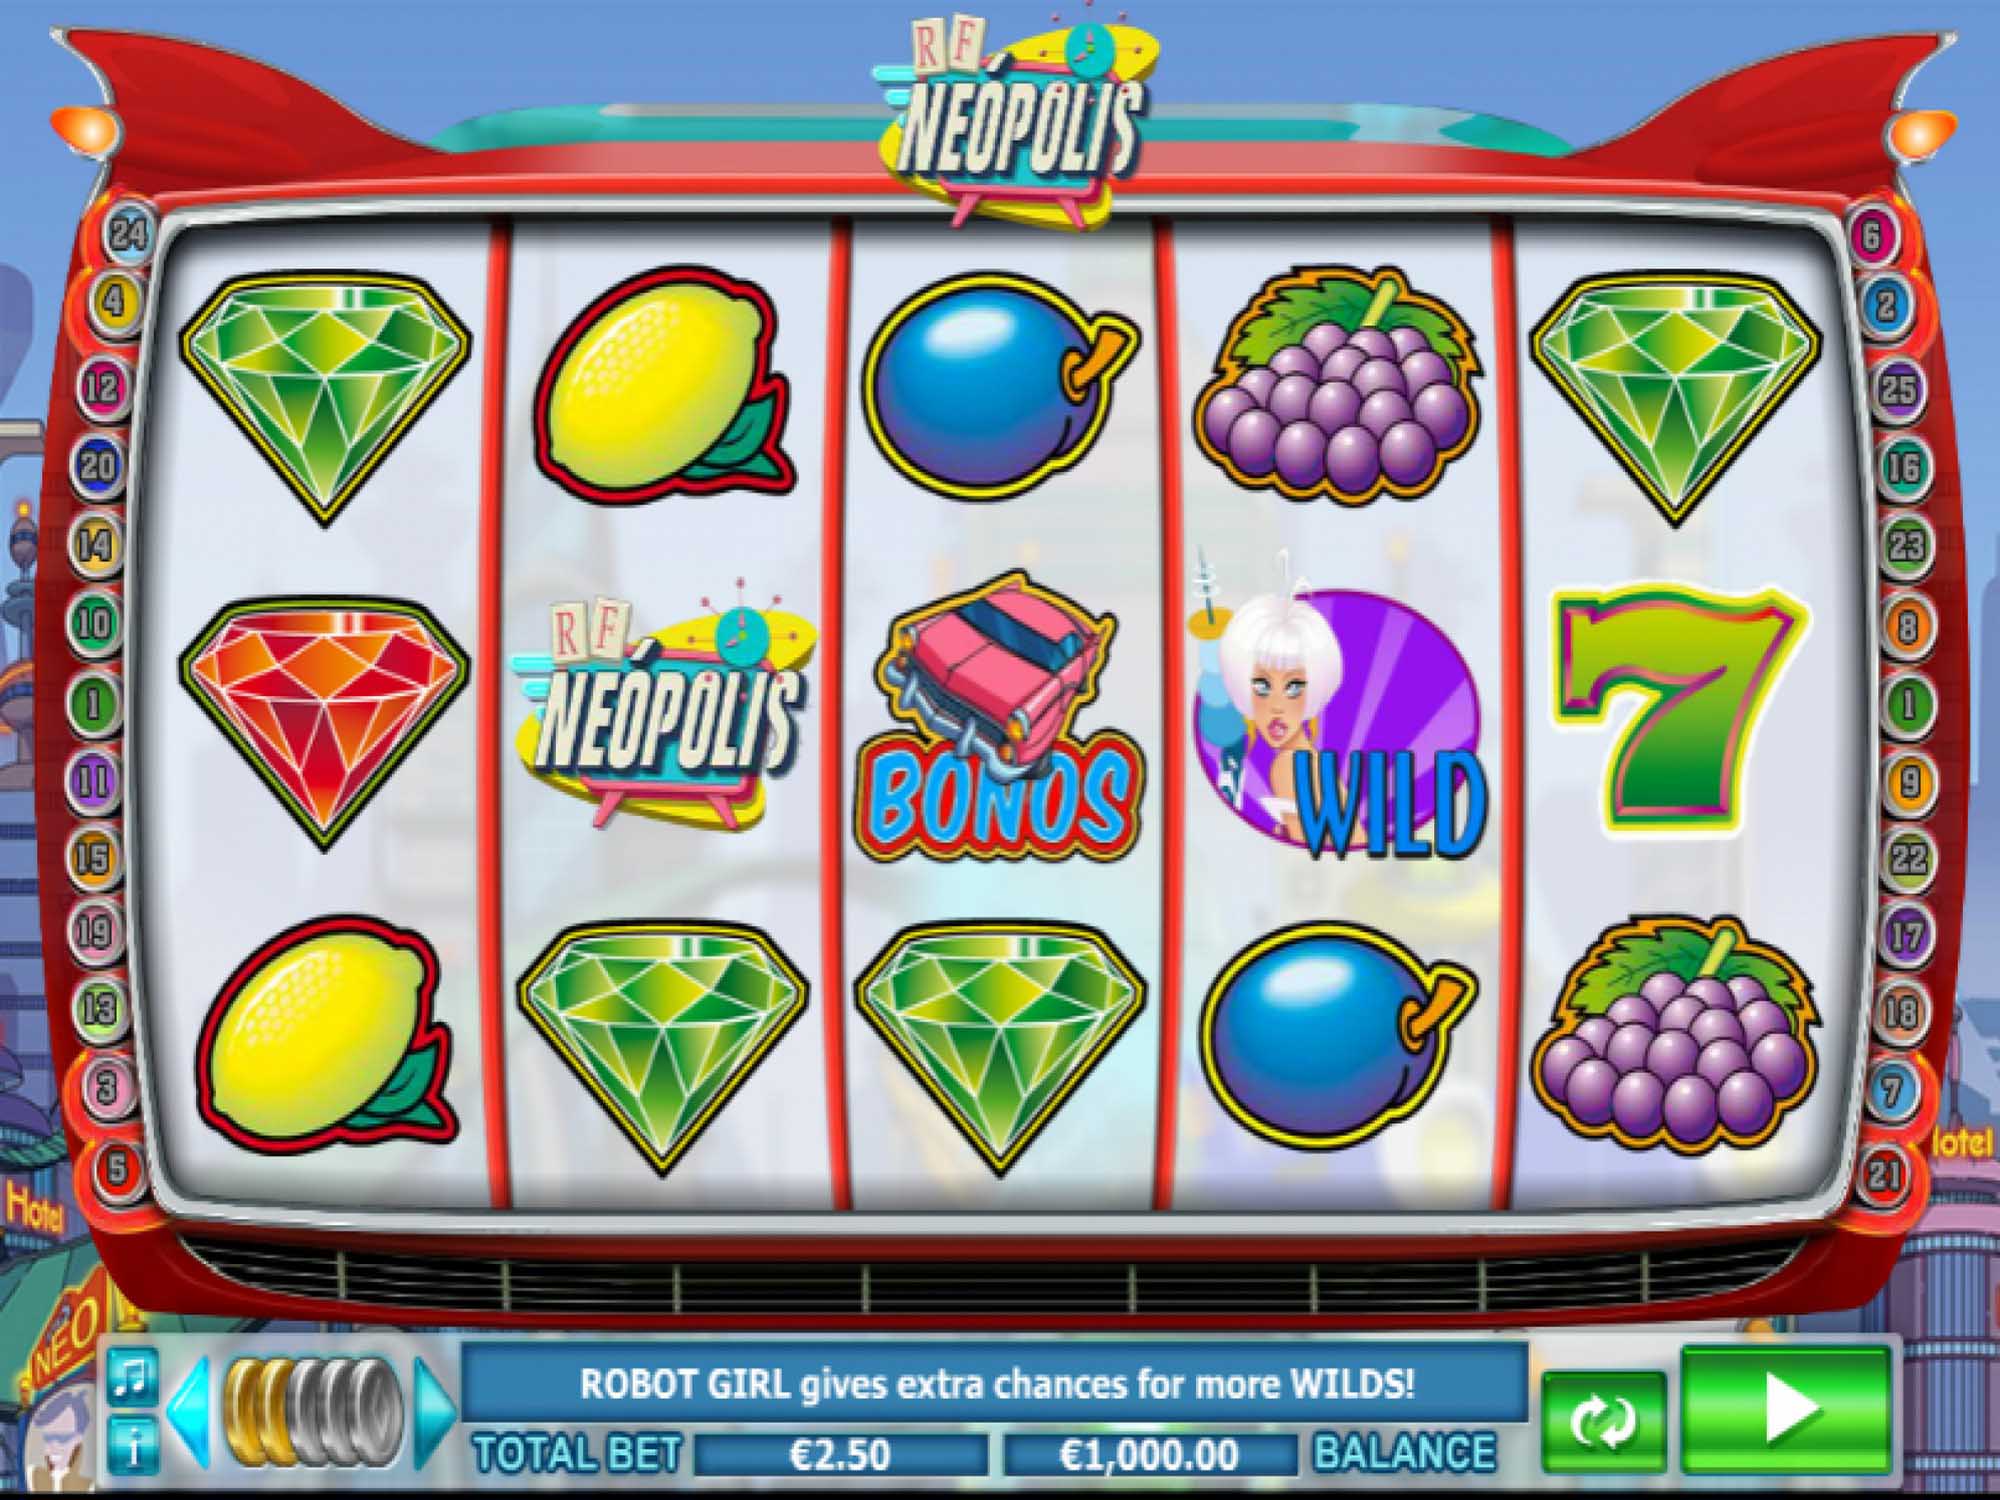 RF Neopolis video slot game screenshot